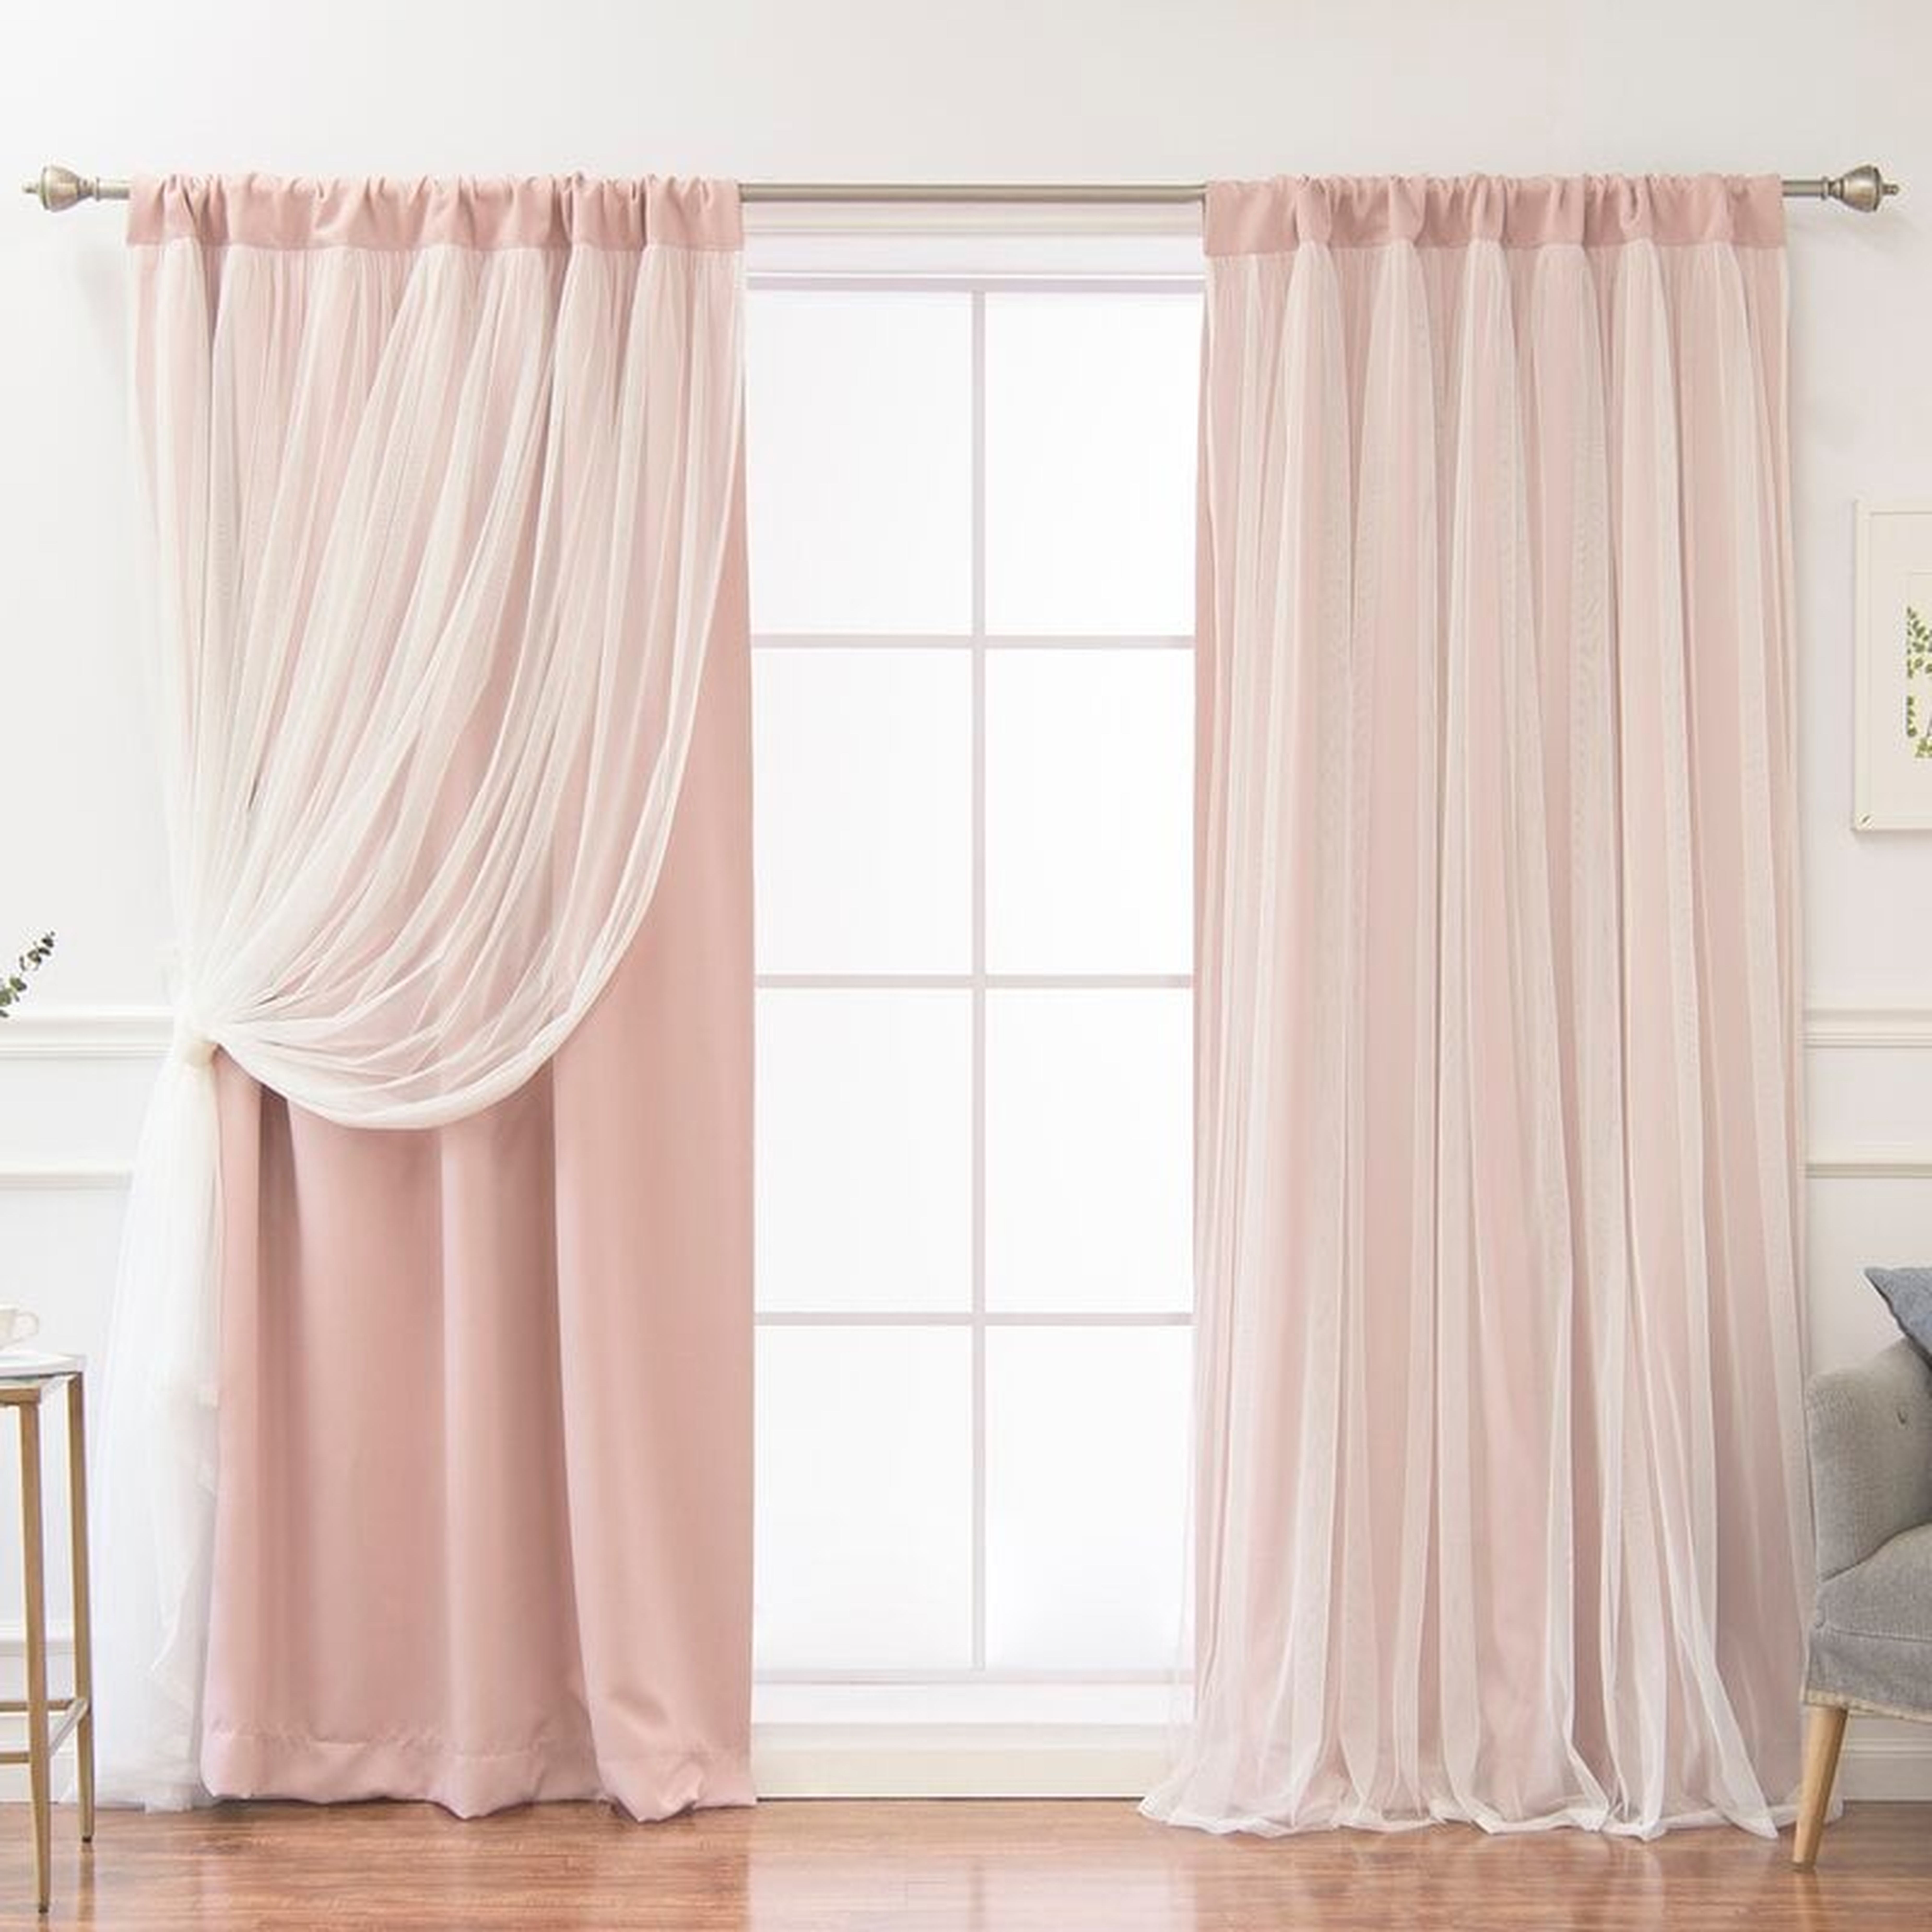 Harborcreek Solid Blackout Thermal Rod Pocket Curtains (Set of 2), Dusty Pink, 96" L - Wayfair